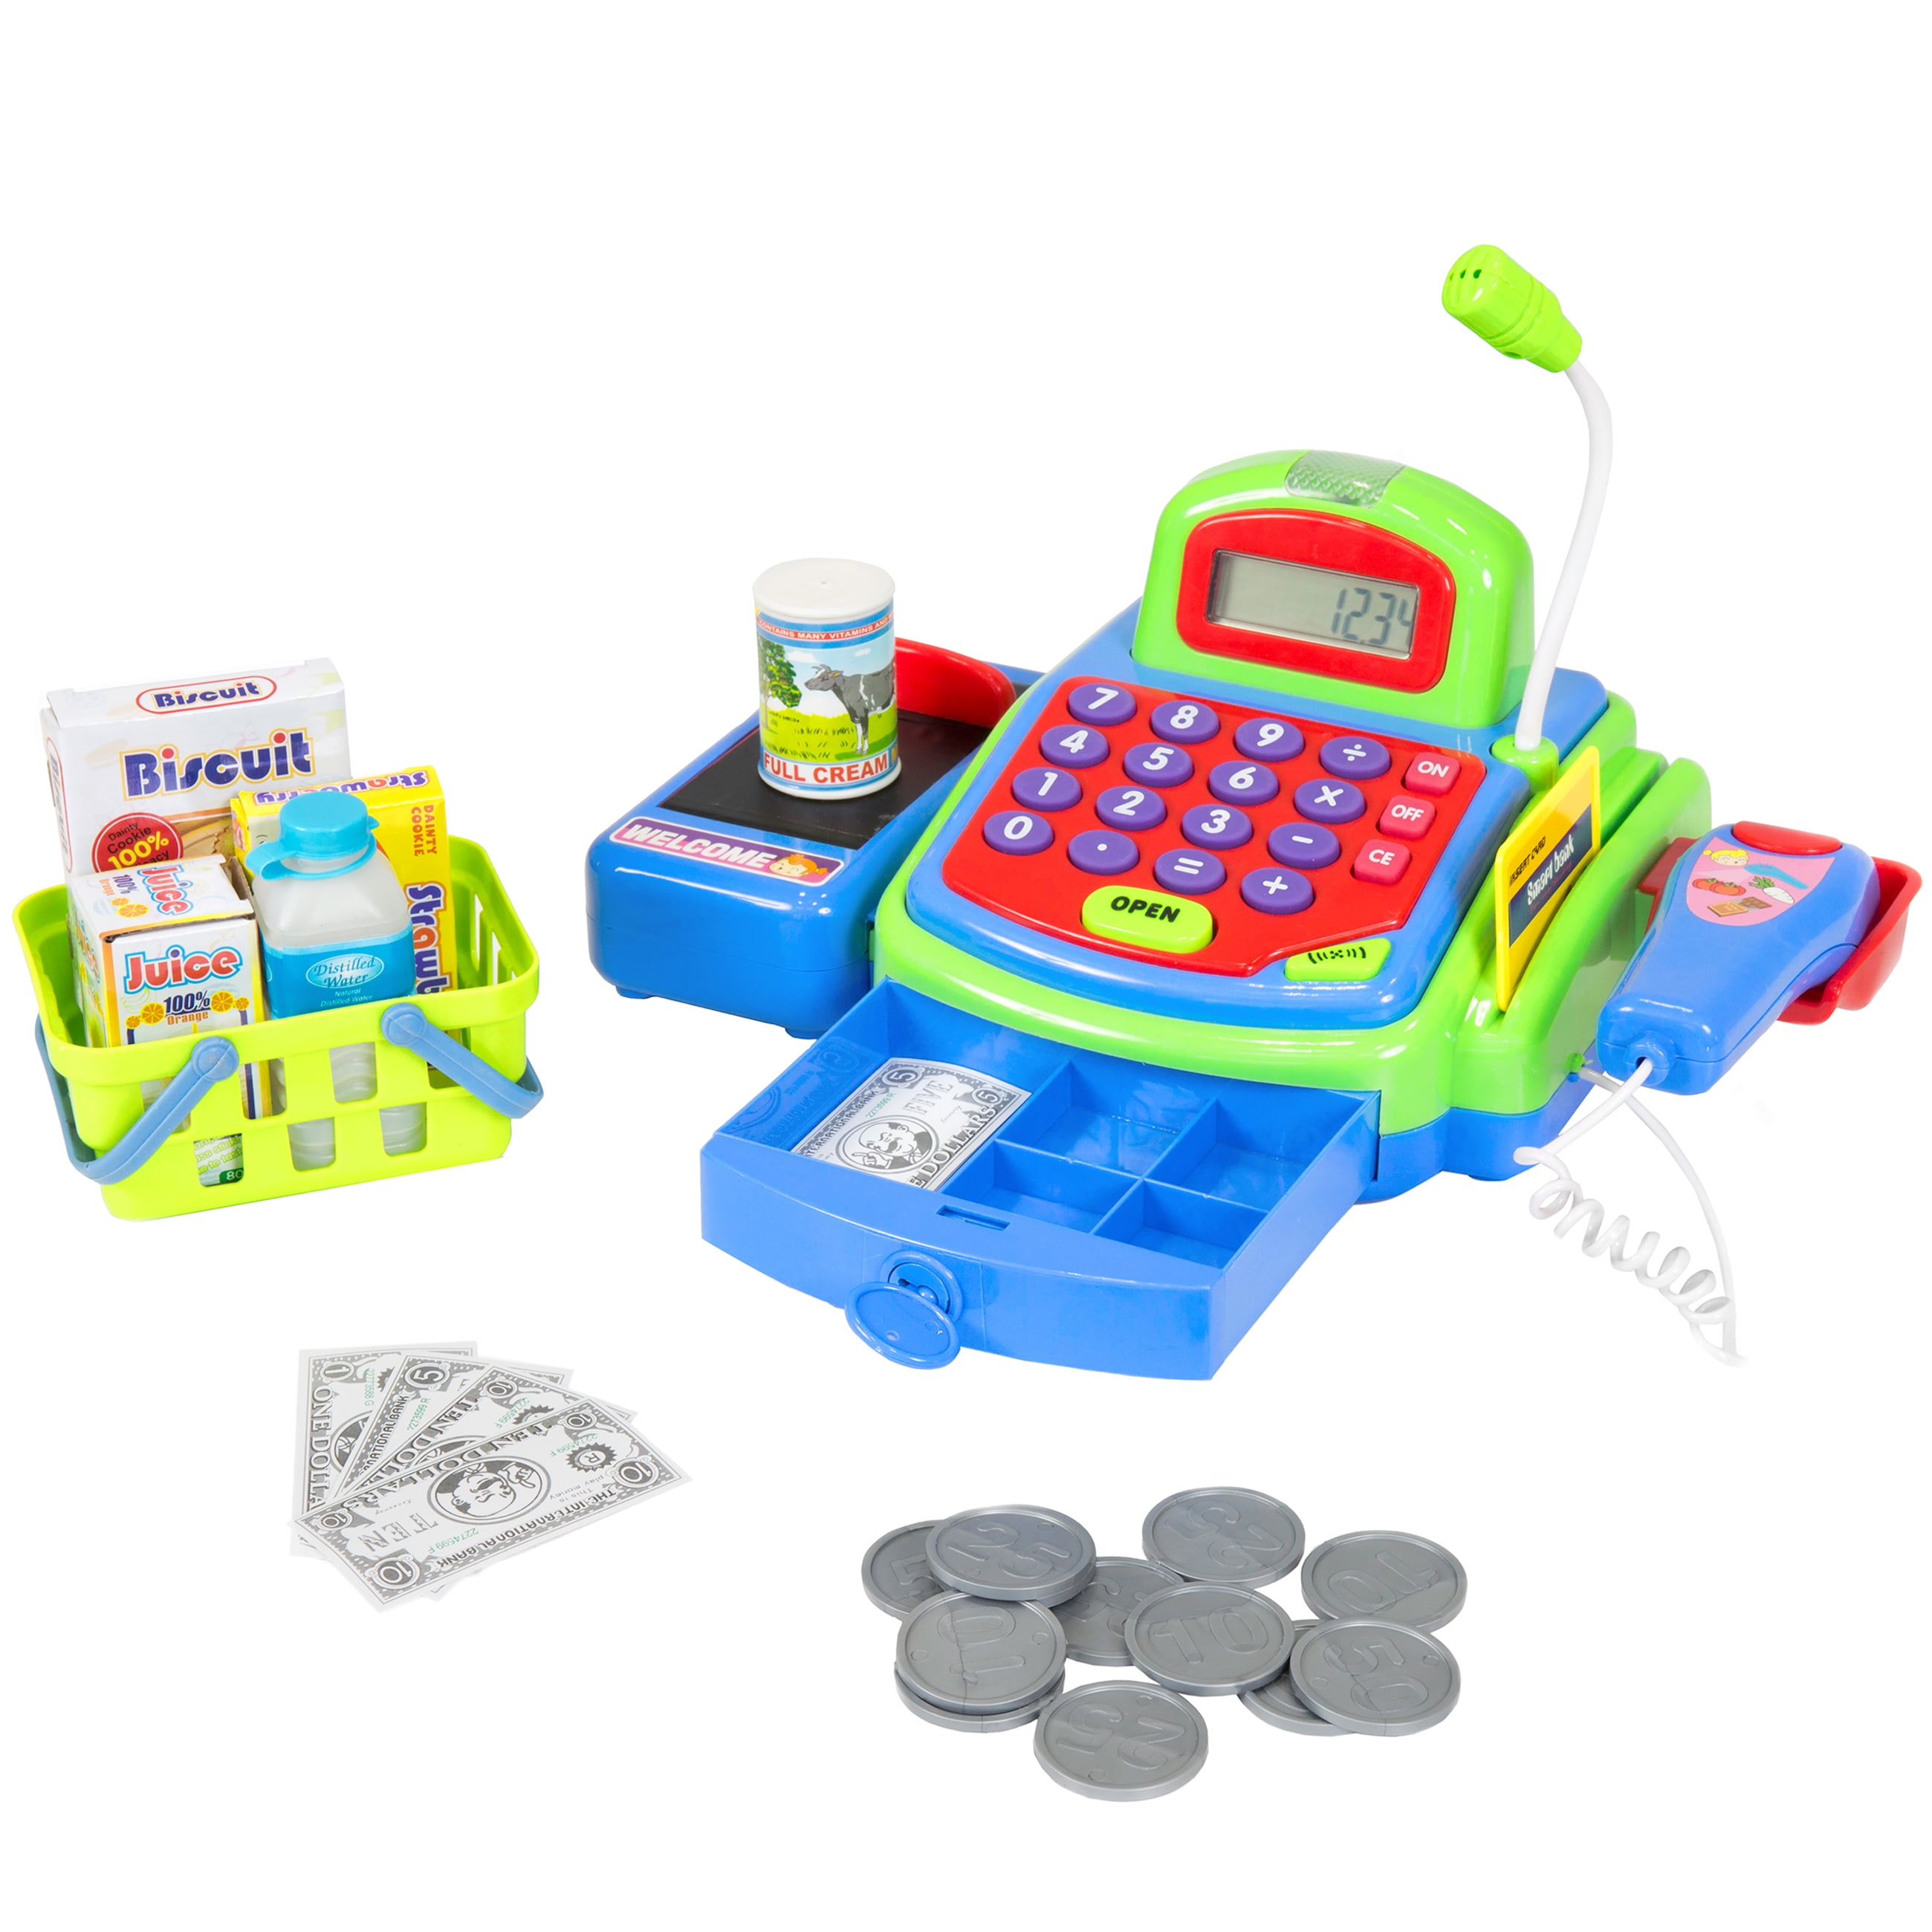 Ganquer Children Toy Set Mini Supermarket Simulation Play House Cash Register Pretend Durable Safe Reliable Toys For Kids